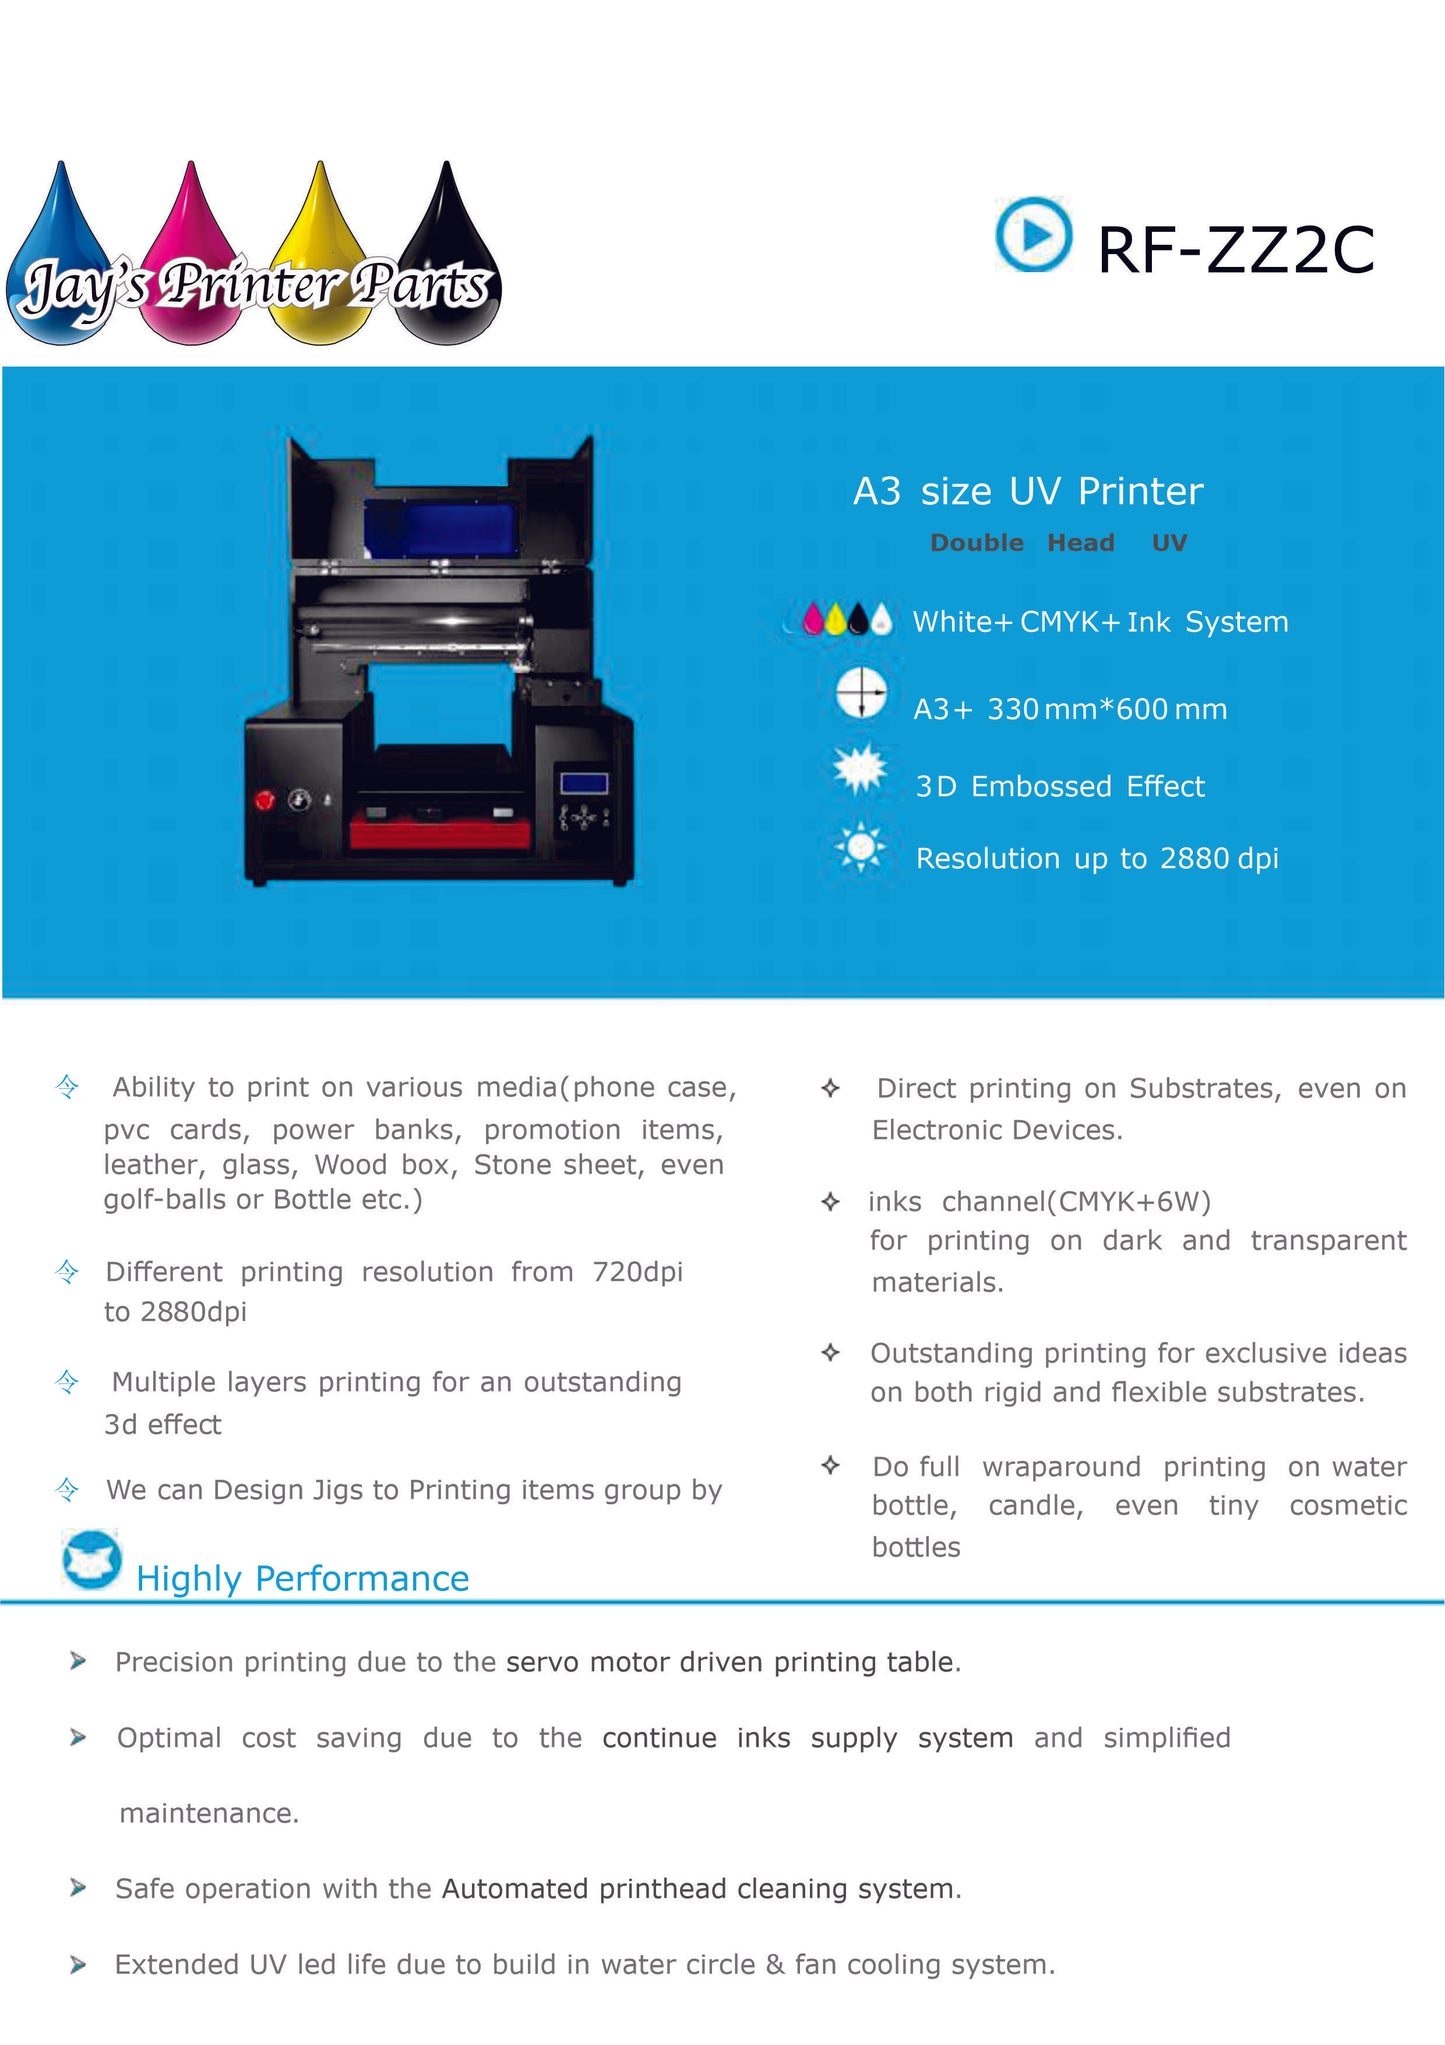 3360 ZZ2C UV printer Flatbed Refine Color from Jay's Printers